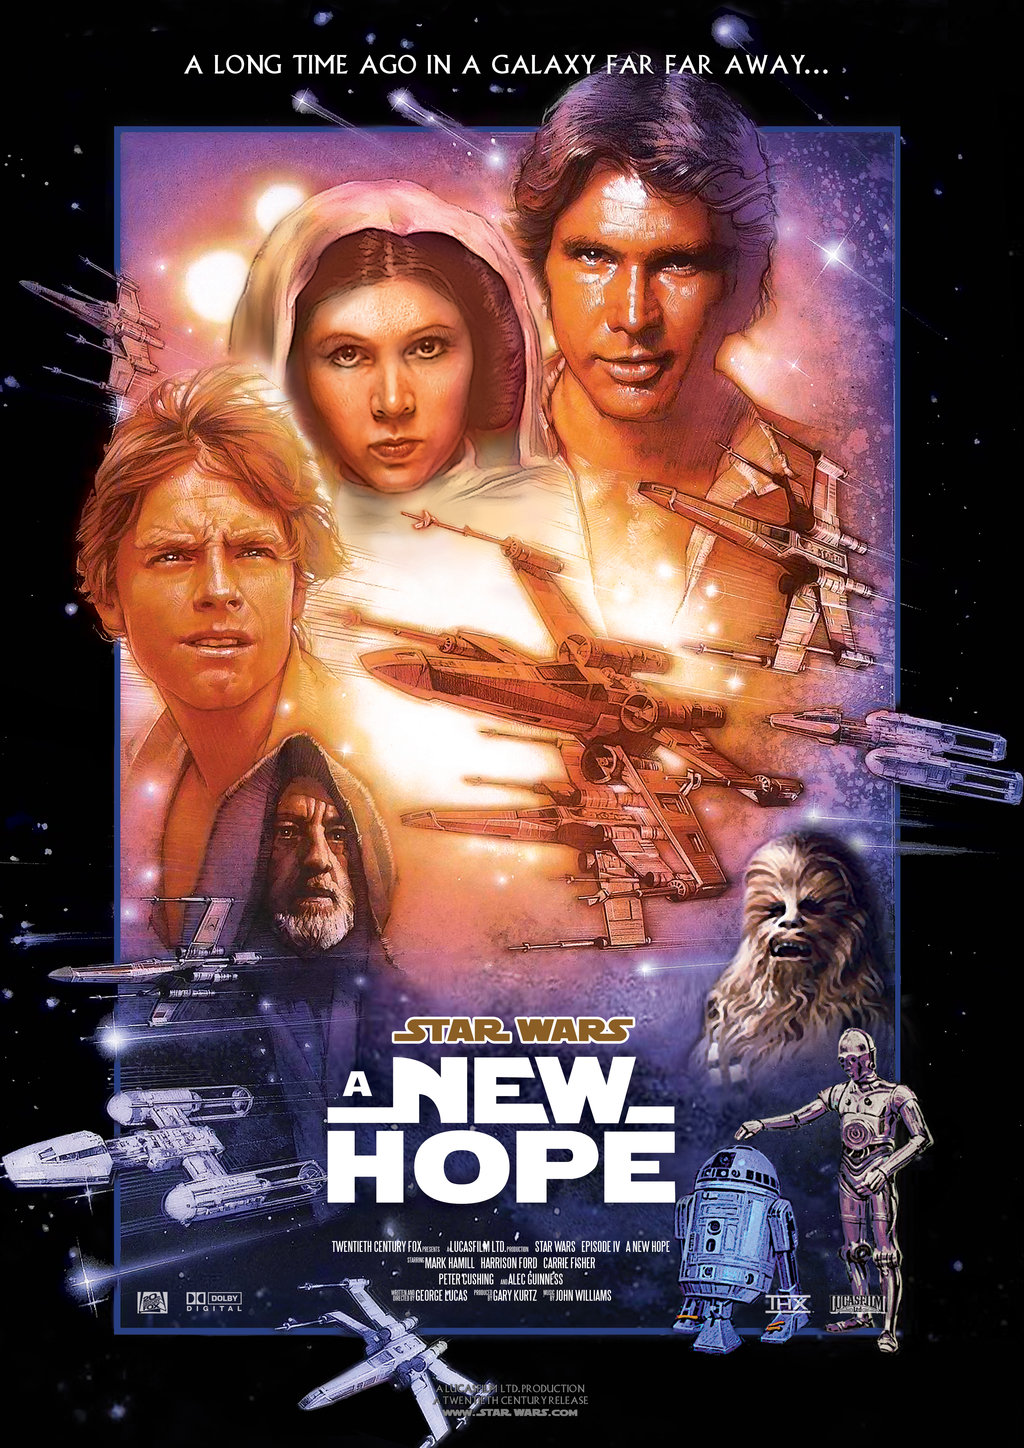 Star Wars Episode IV: A New Hope #17